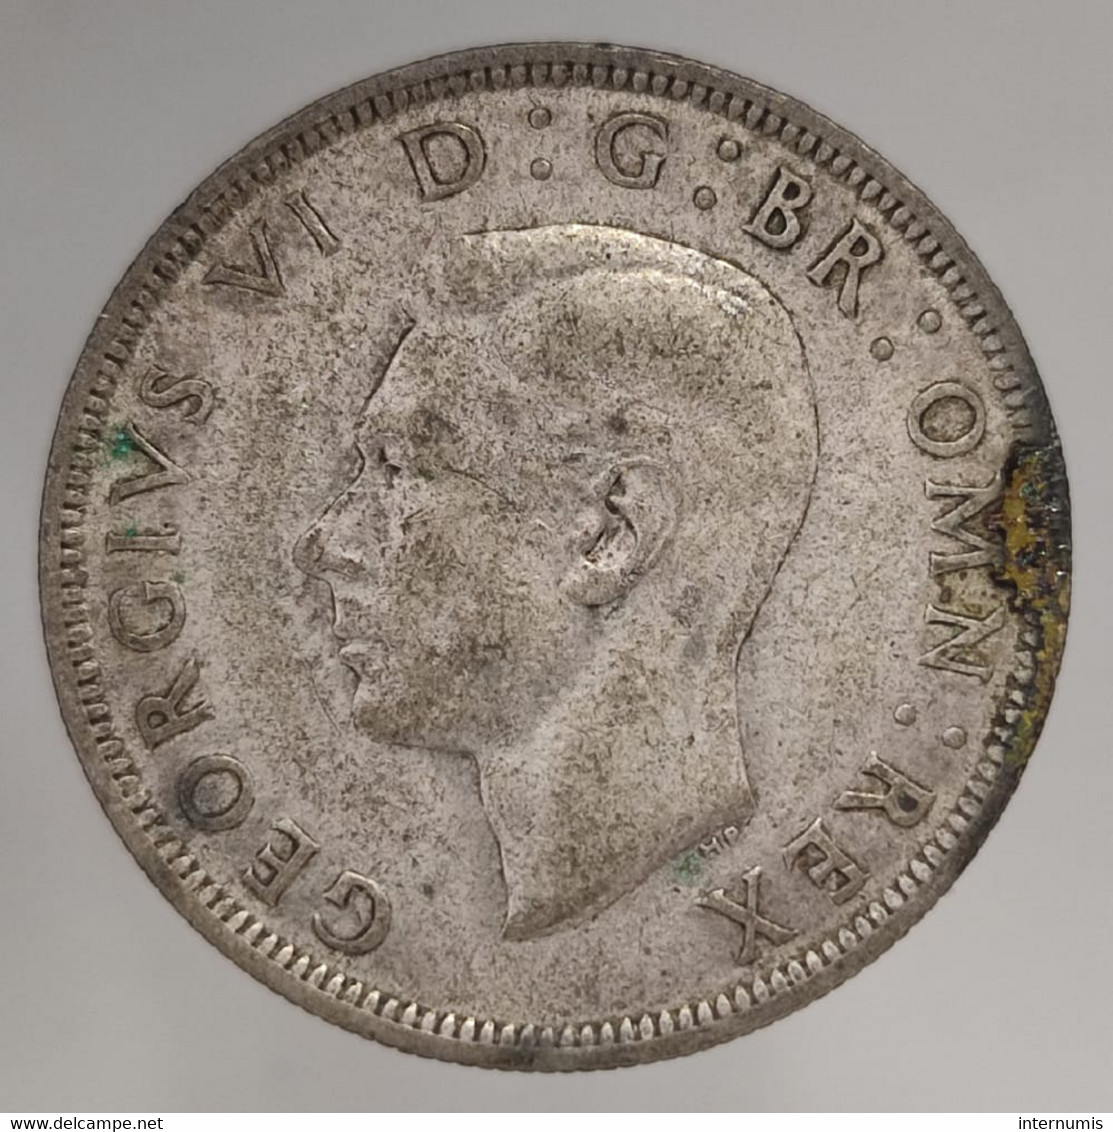 Angleterre / UK, George VI, Half Crown, 1945, Argent (Silver), SUP (AU), KM#856, Sp.4080 - K. 1/2 Crown